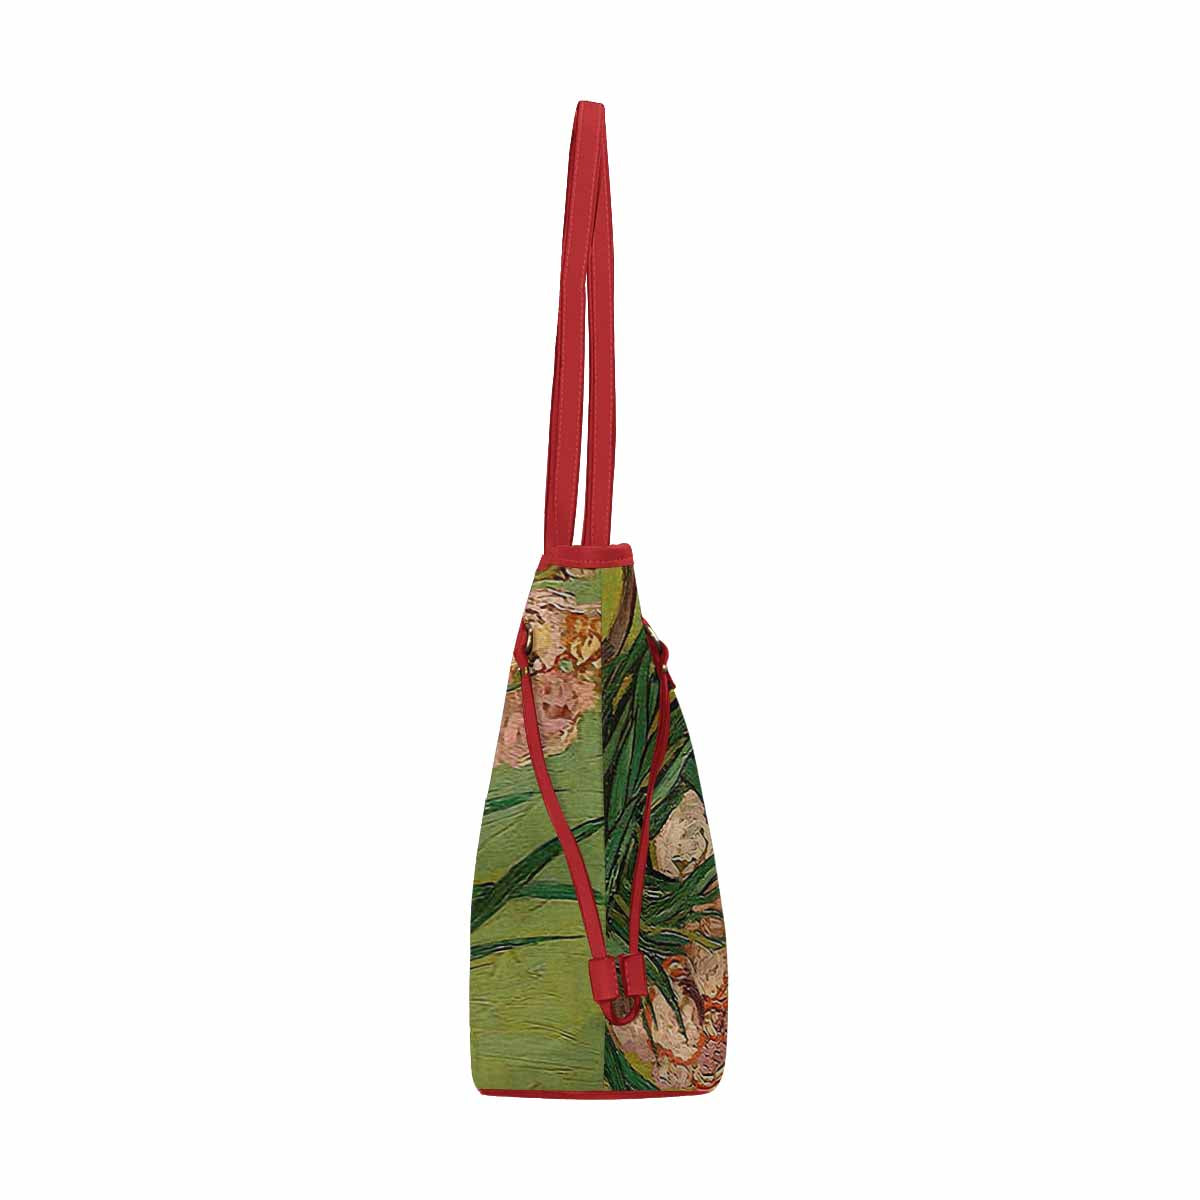 Vintage Floral Handbag, Classic Handbag, Mod 1695361 Design 09, RED TRIM